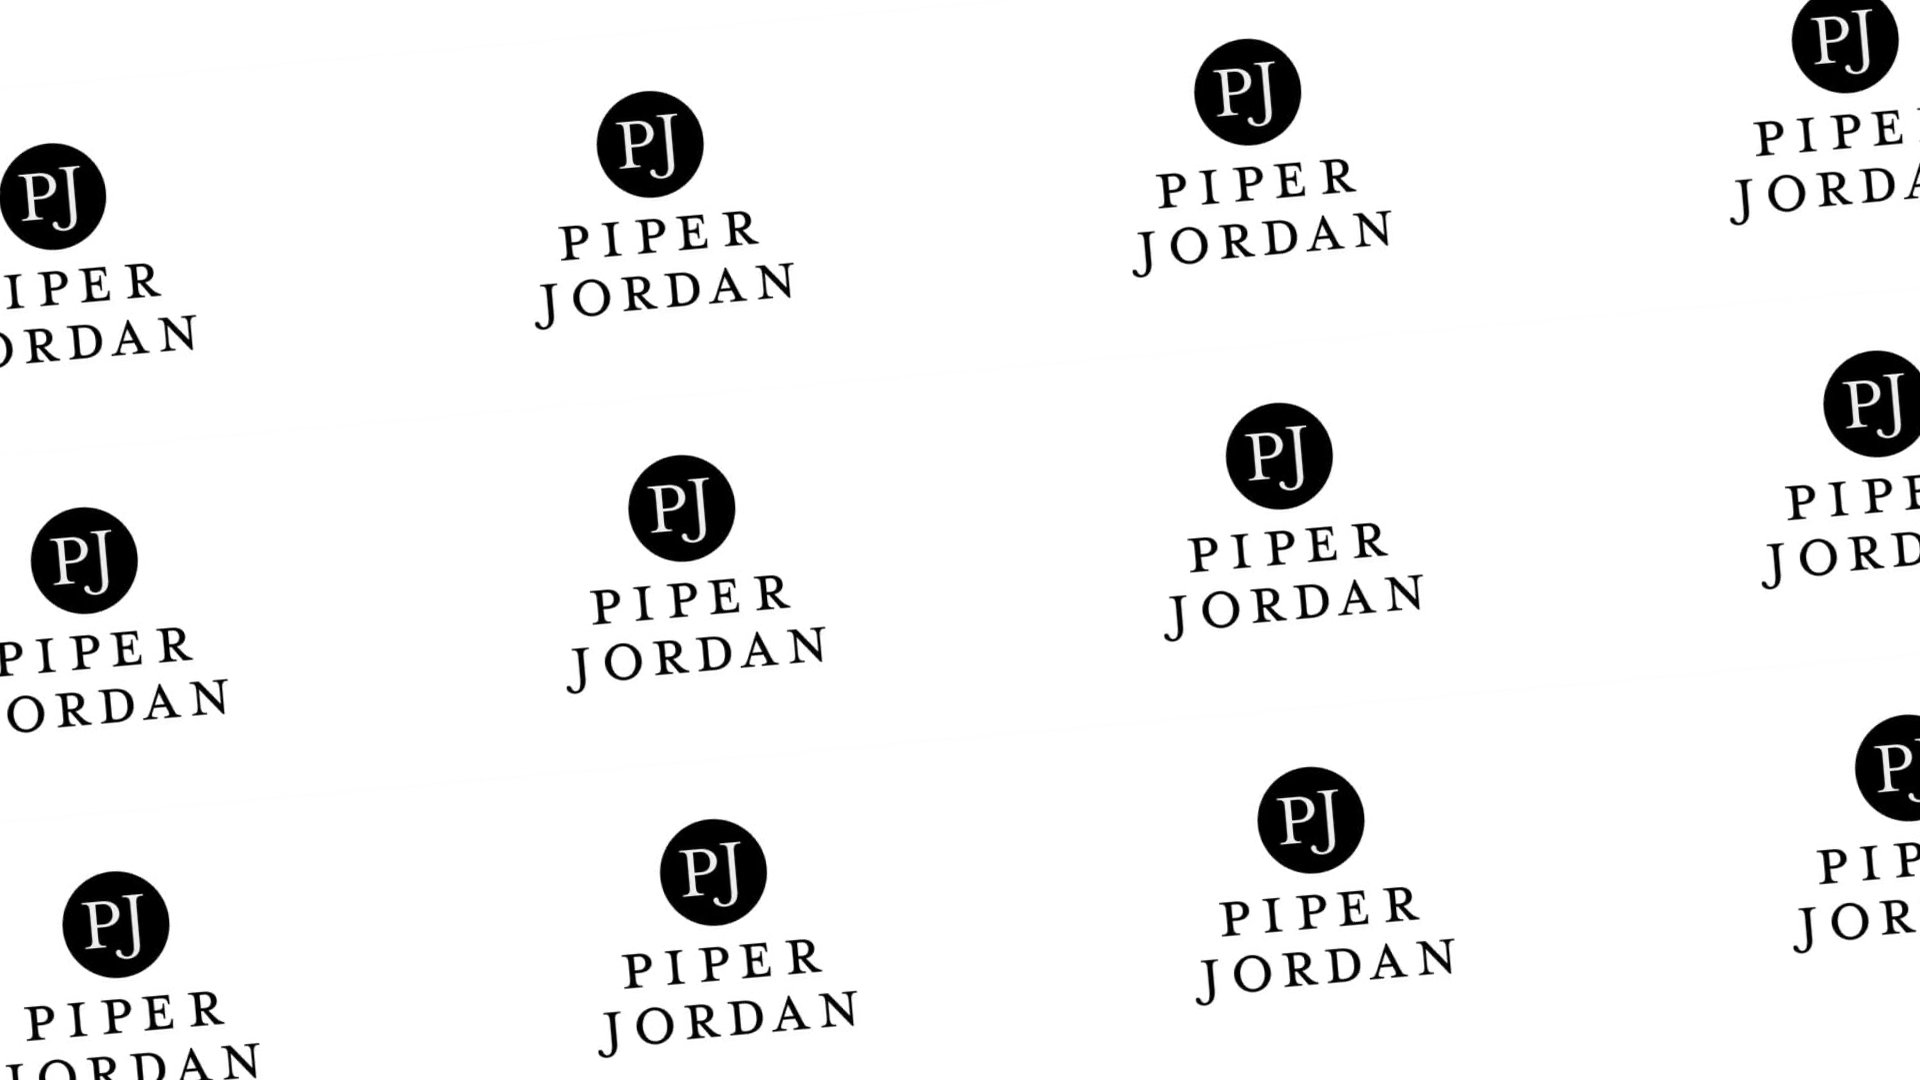 Piper Jordan partner banner